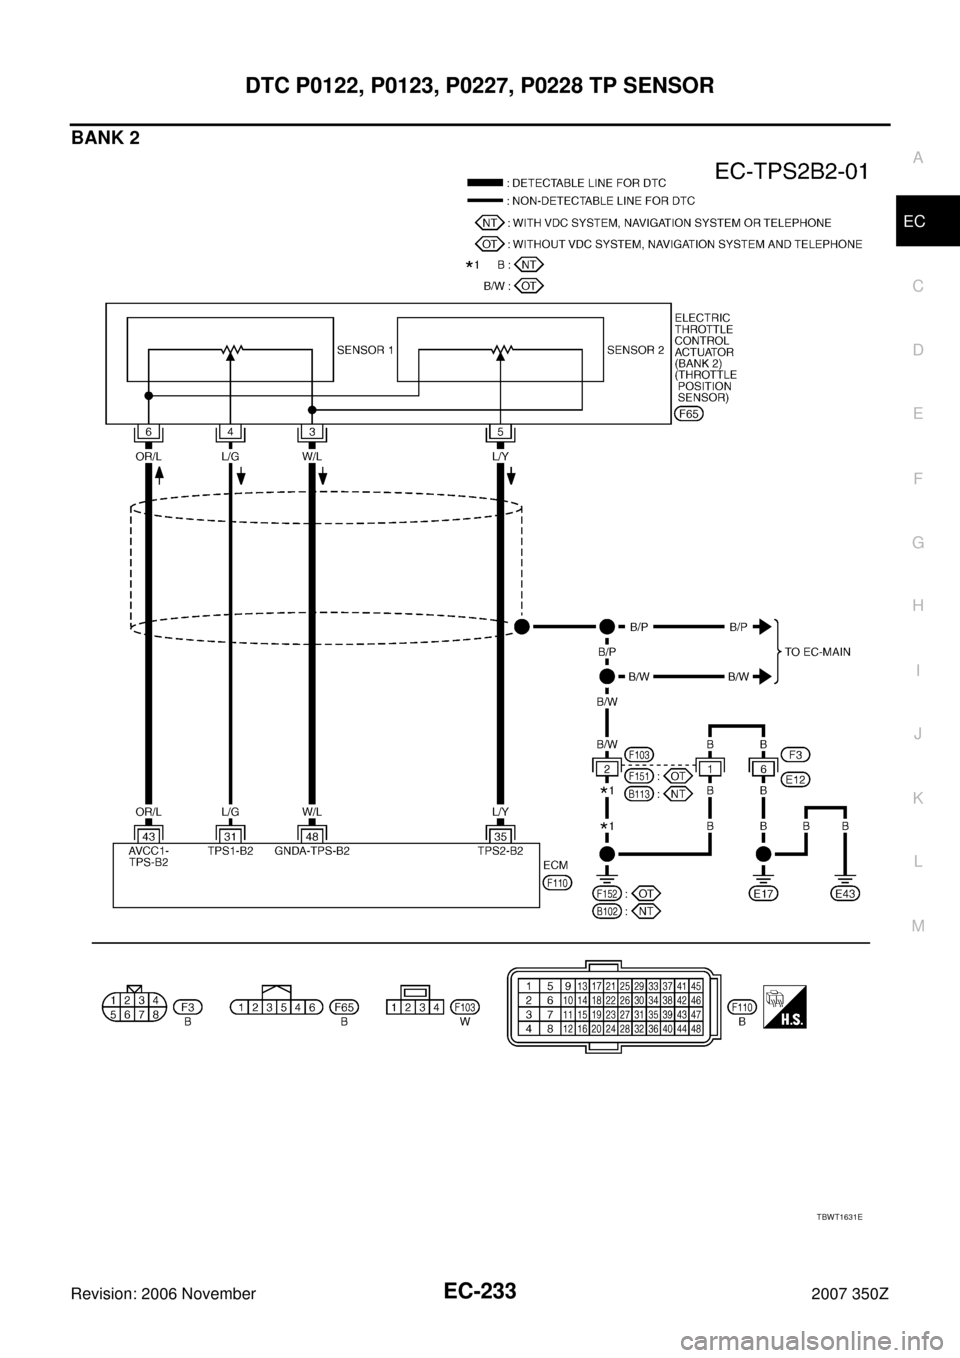 NISSAN 350Z 2007 Z33 Engine Control Repair Manual DTC P0122, P0123, P0227, P0228 TP SENSOR
EC-233
C
D
E
F
G
H
I
J
K
L
MA
EC
Revision: 2006 November2007 350Z
BANK 2
TBWT1631E 